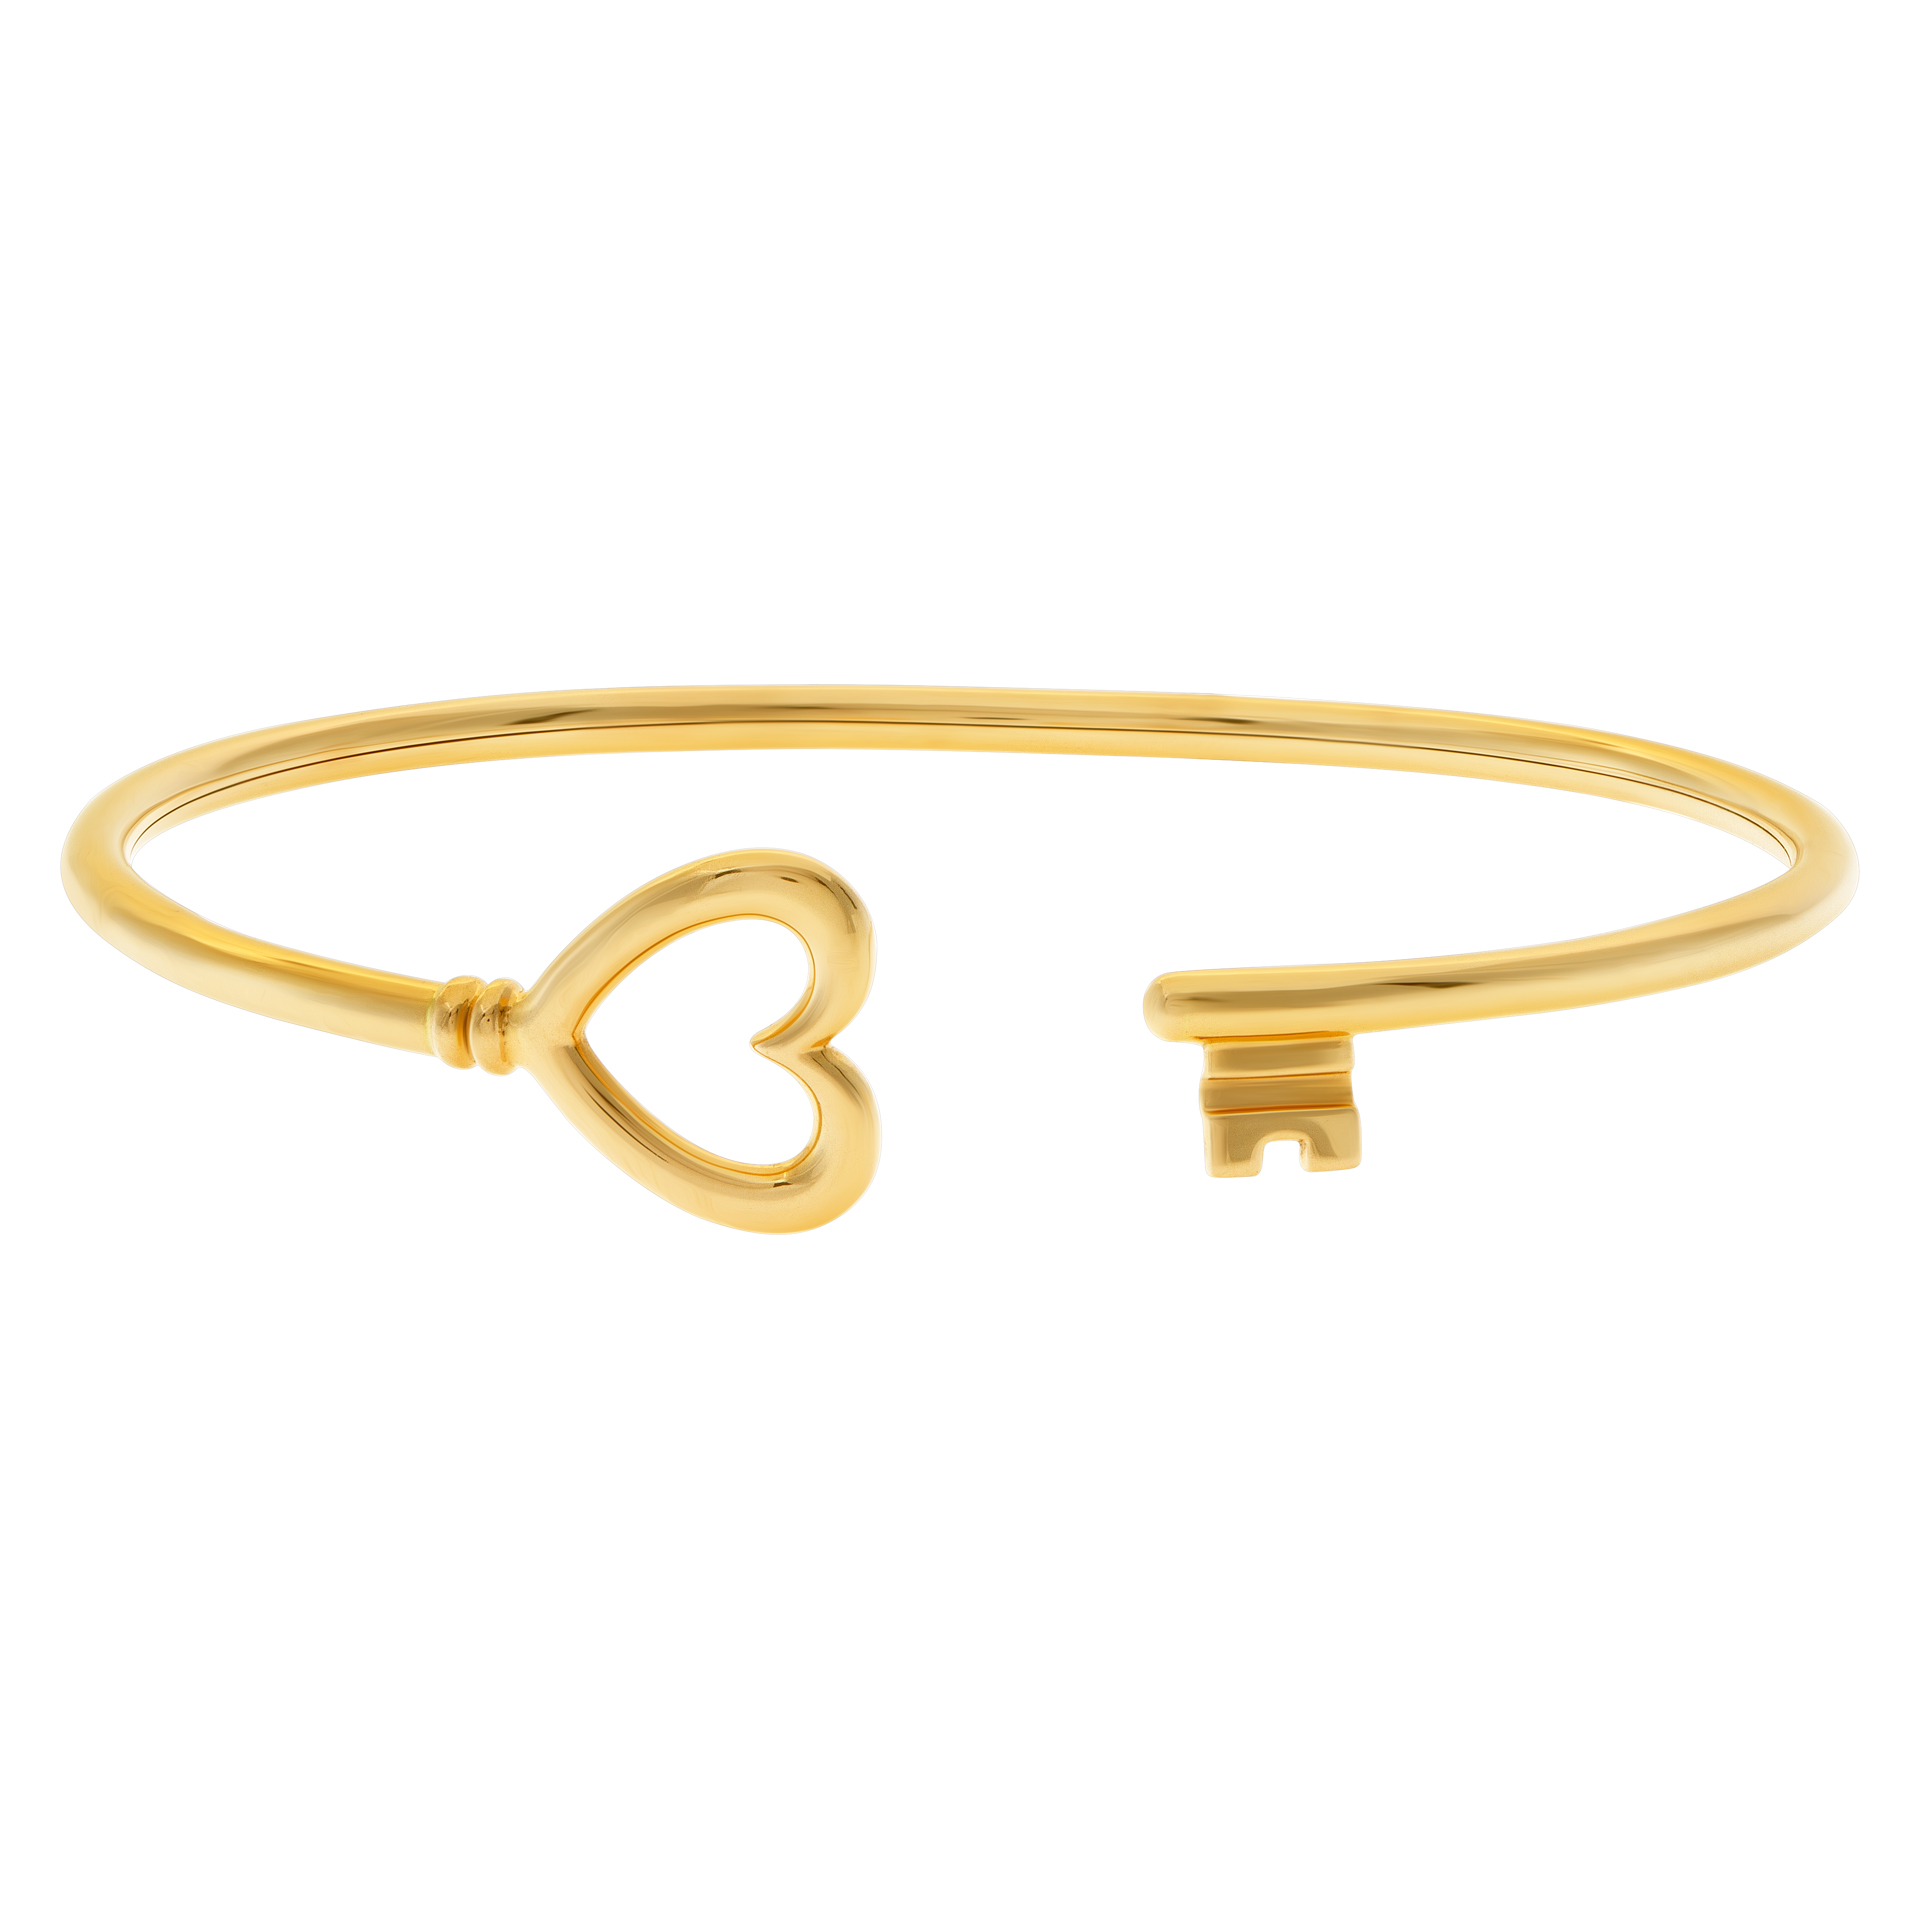 Tiffany & Co wire key bangle bracelet in 18k yellow gold image 1